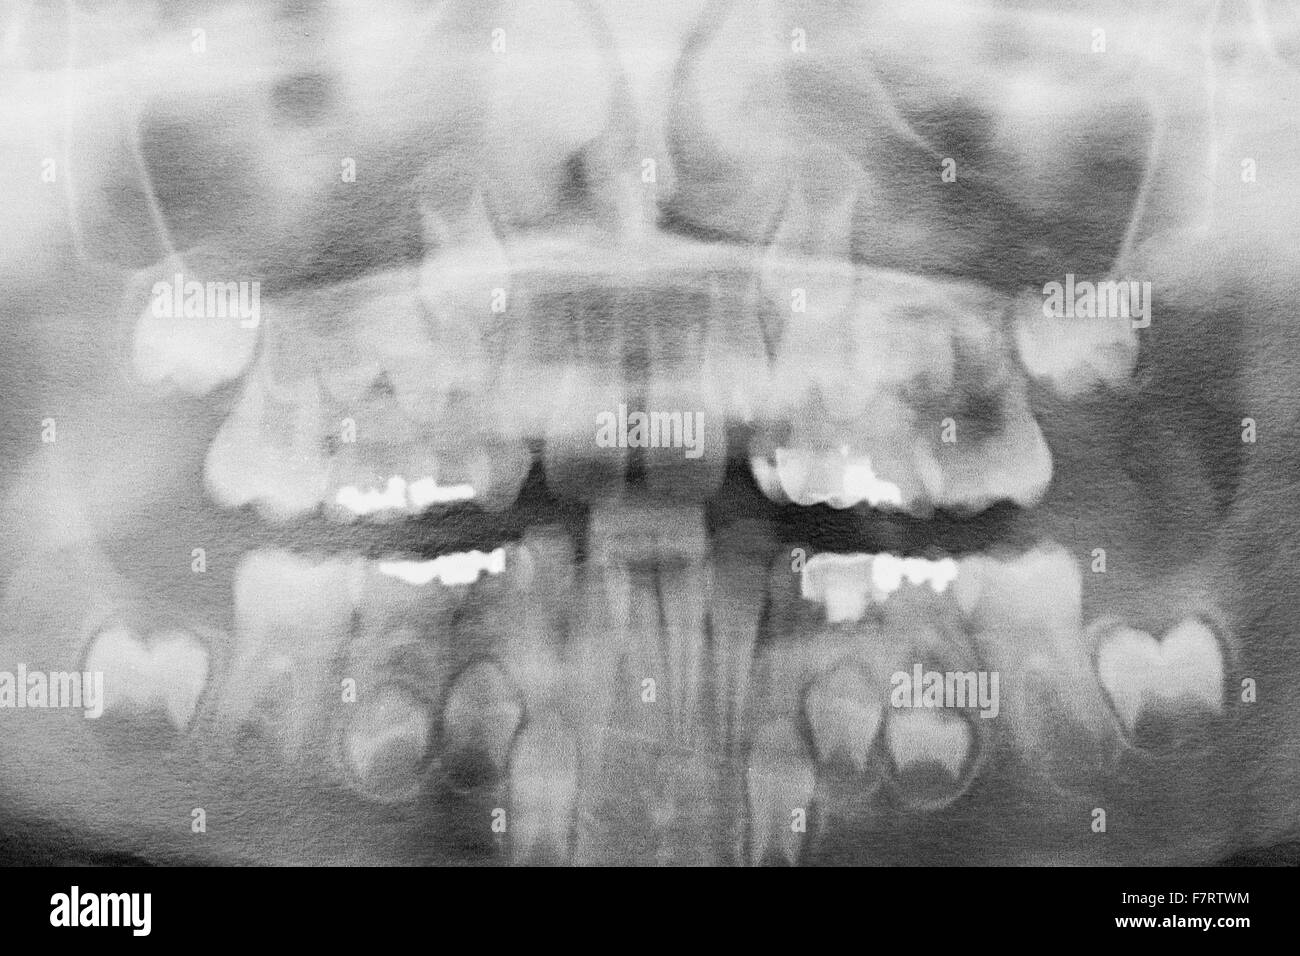 Bambini Panoramica denti umani odontoiatrici a raggi x. Foto Stock